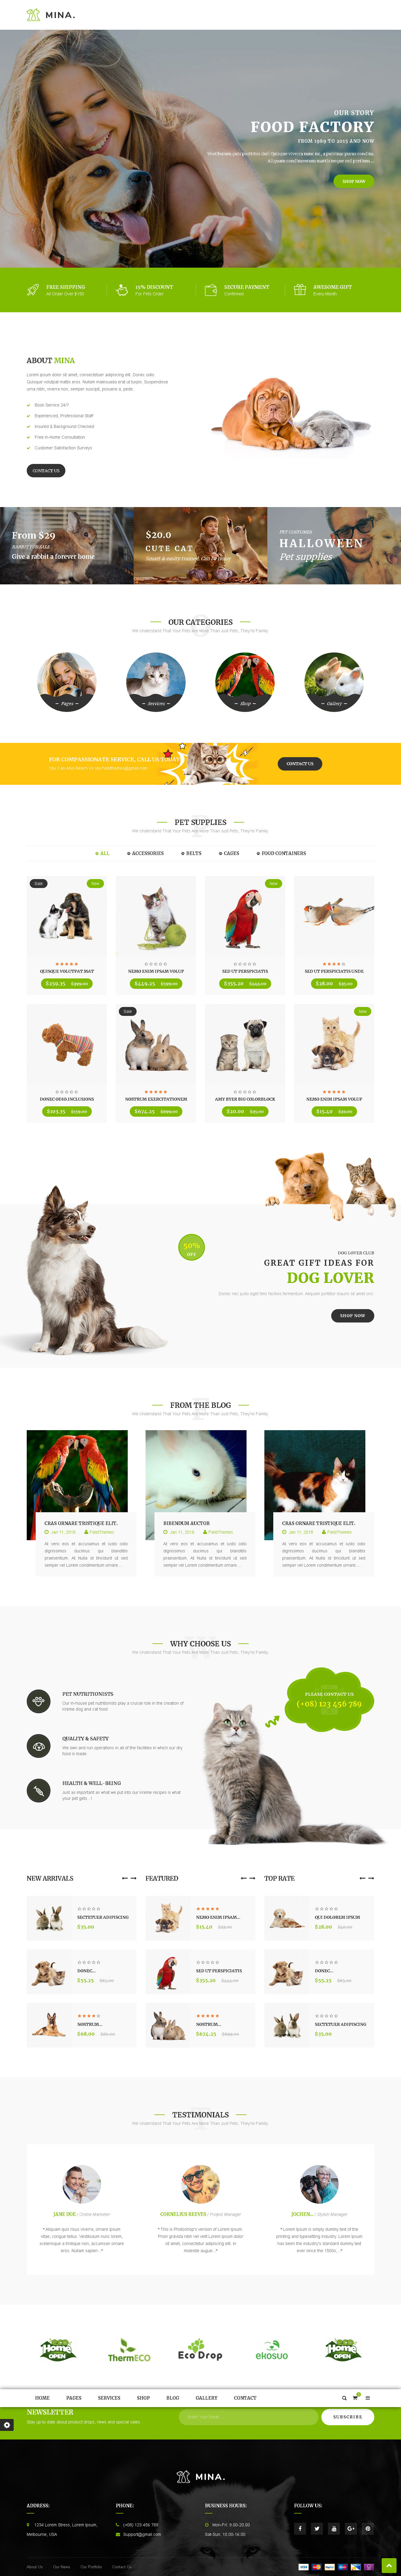 Mina - Pet Shop Responsive Prestashop 1.7 Theme - Top Pretashop Themes for Pet Care Service